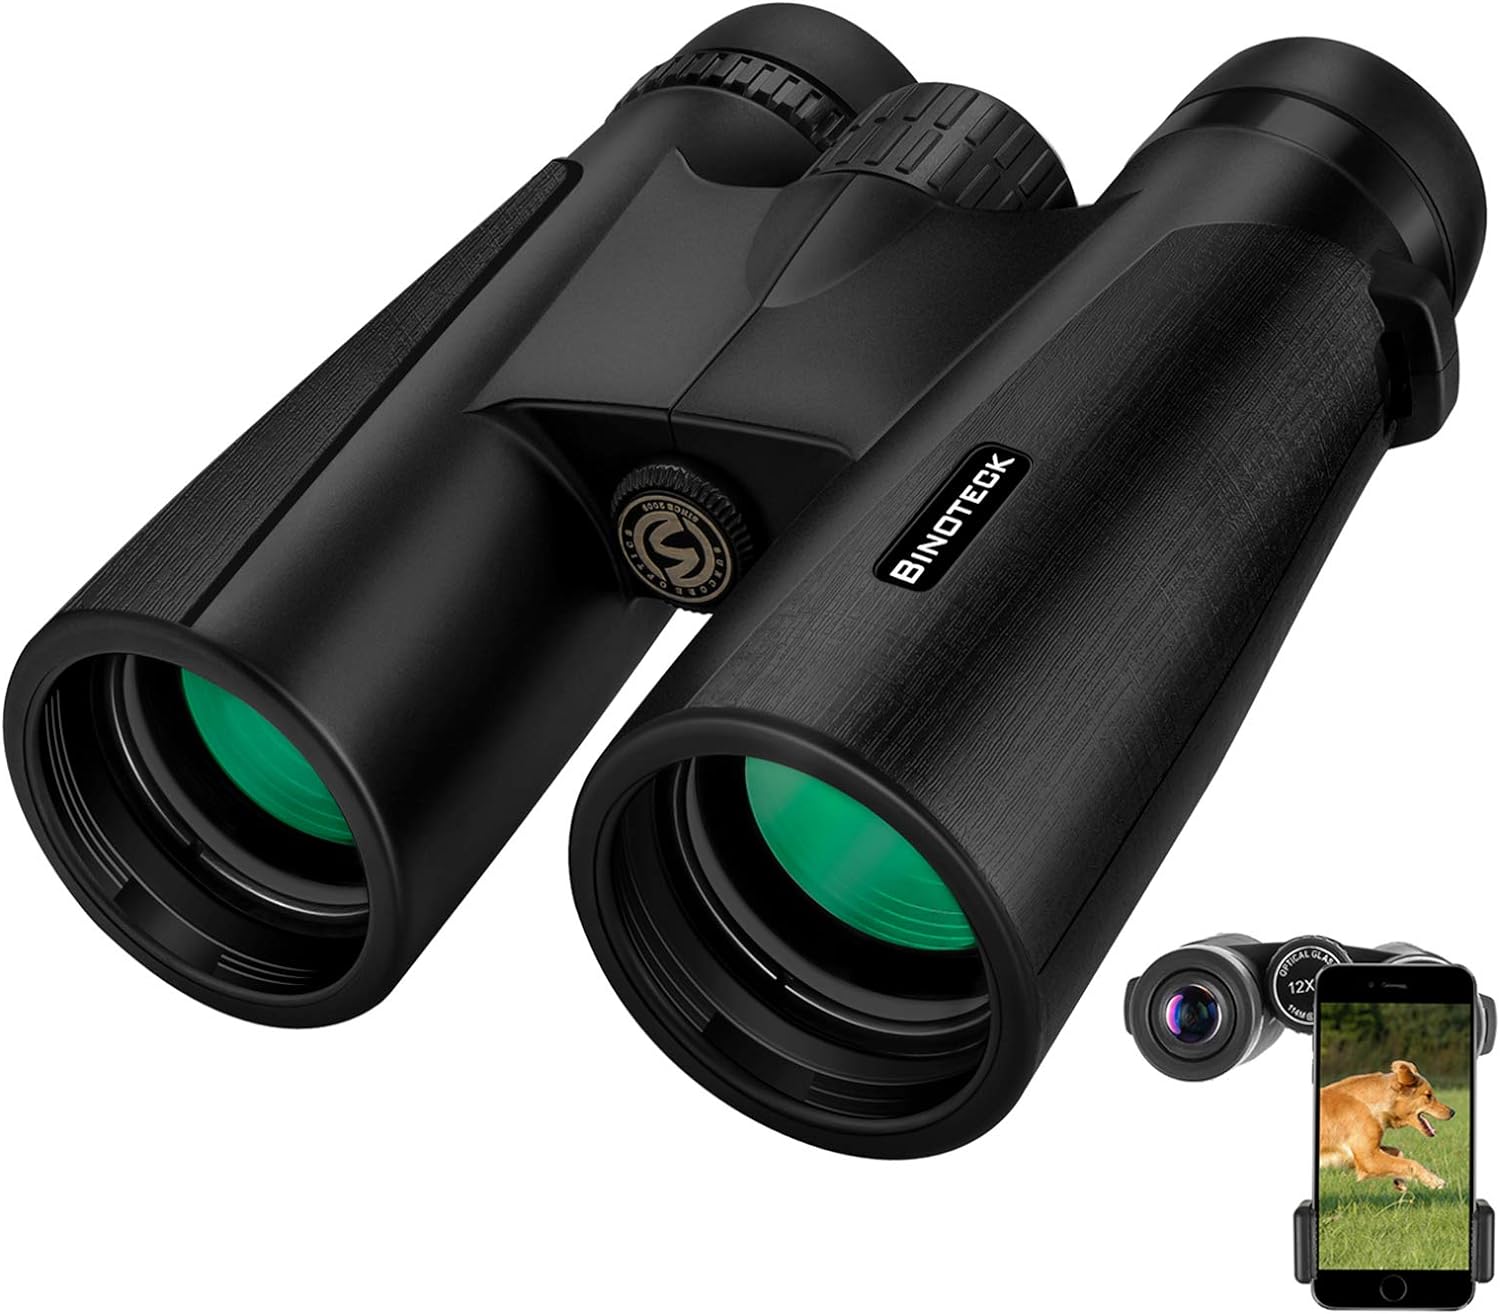 Binoteck 10x42 Binoculars for Adults - Professional HD Roof BAK4 Prism Lens Binoculars for Bird Watching, Hunting, Travel, Sports, Opera, Concert, with Carrying Bag (1.0 lbs)